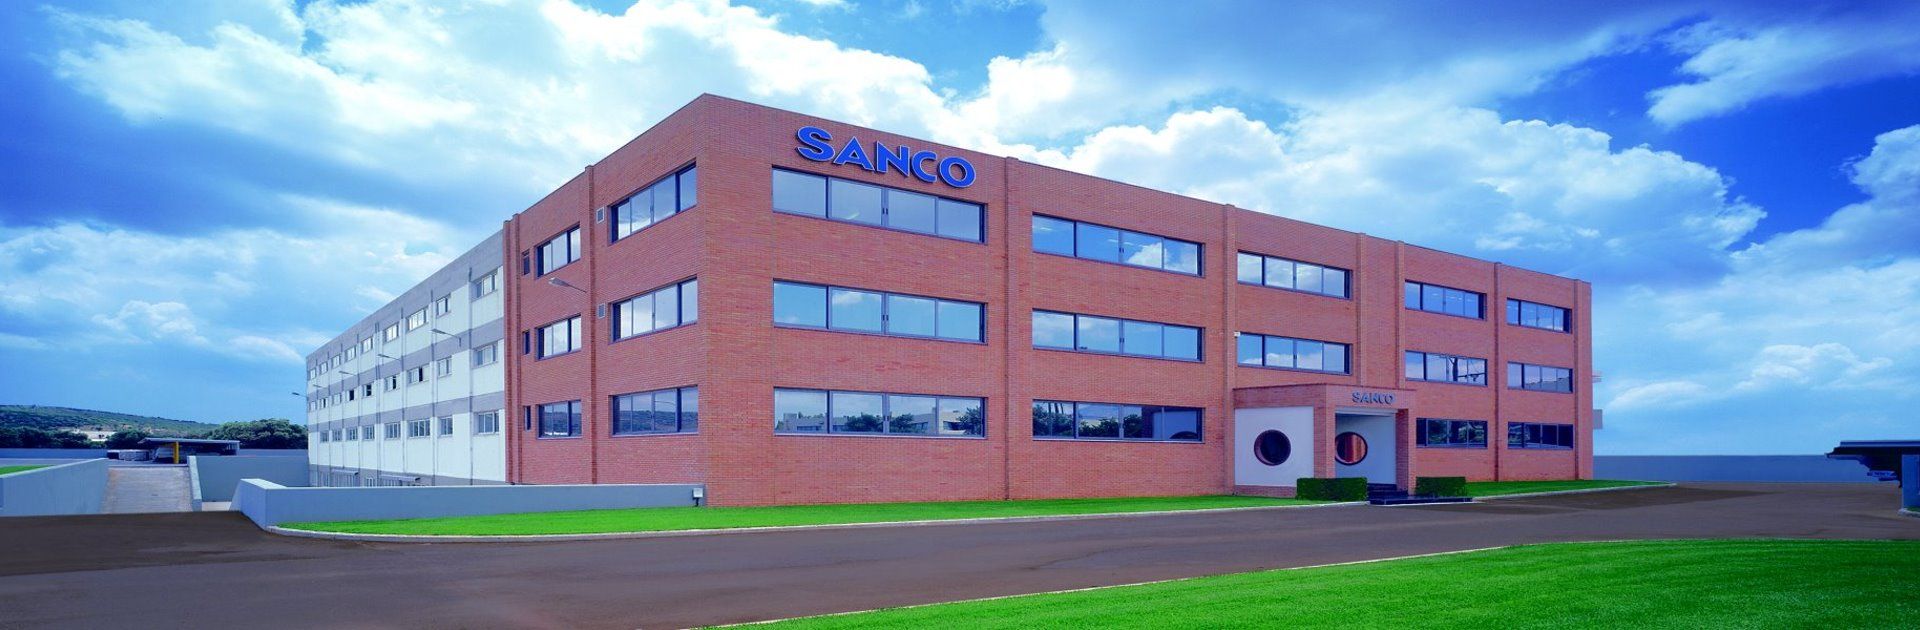 sanco-company